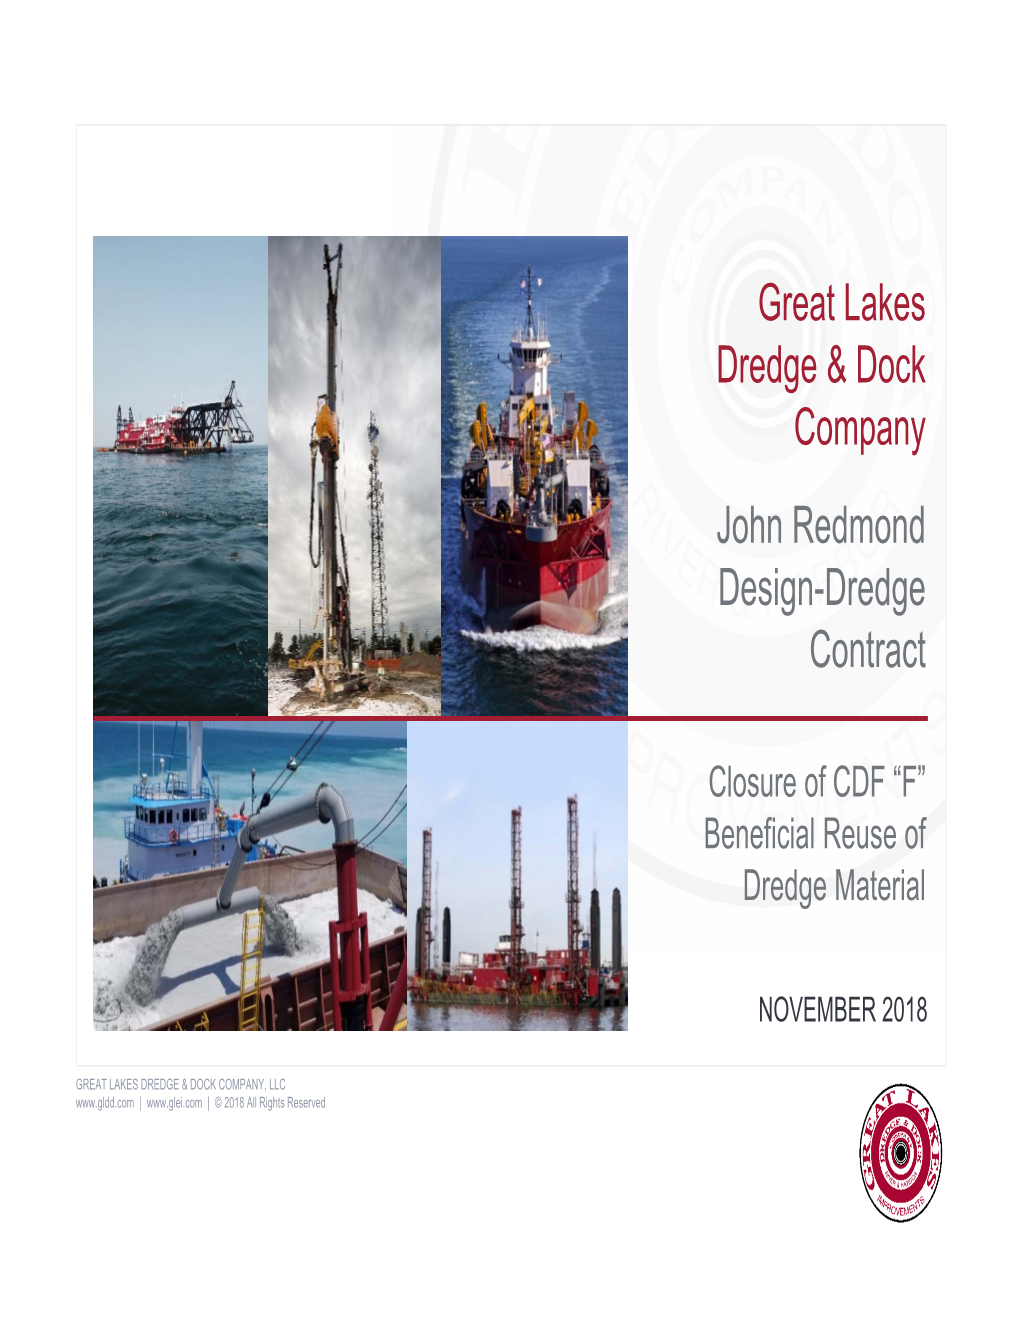 Great Lakes Dredge & Dock Company John Redmond Design-Dredge